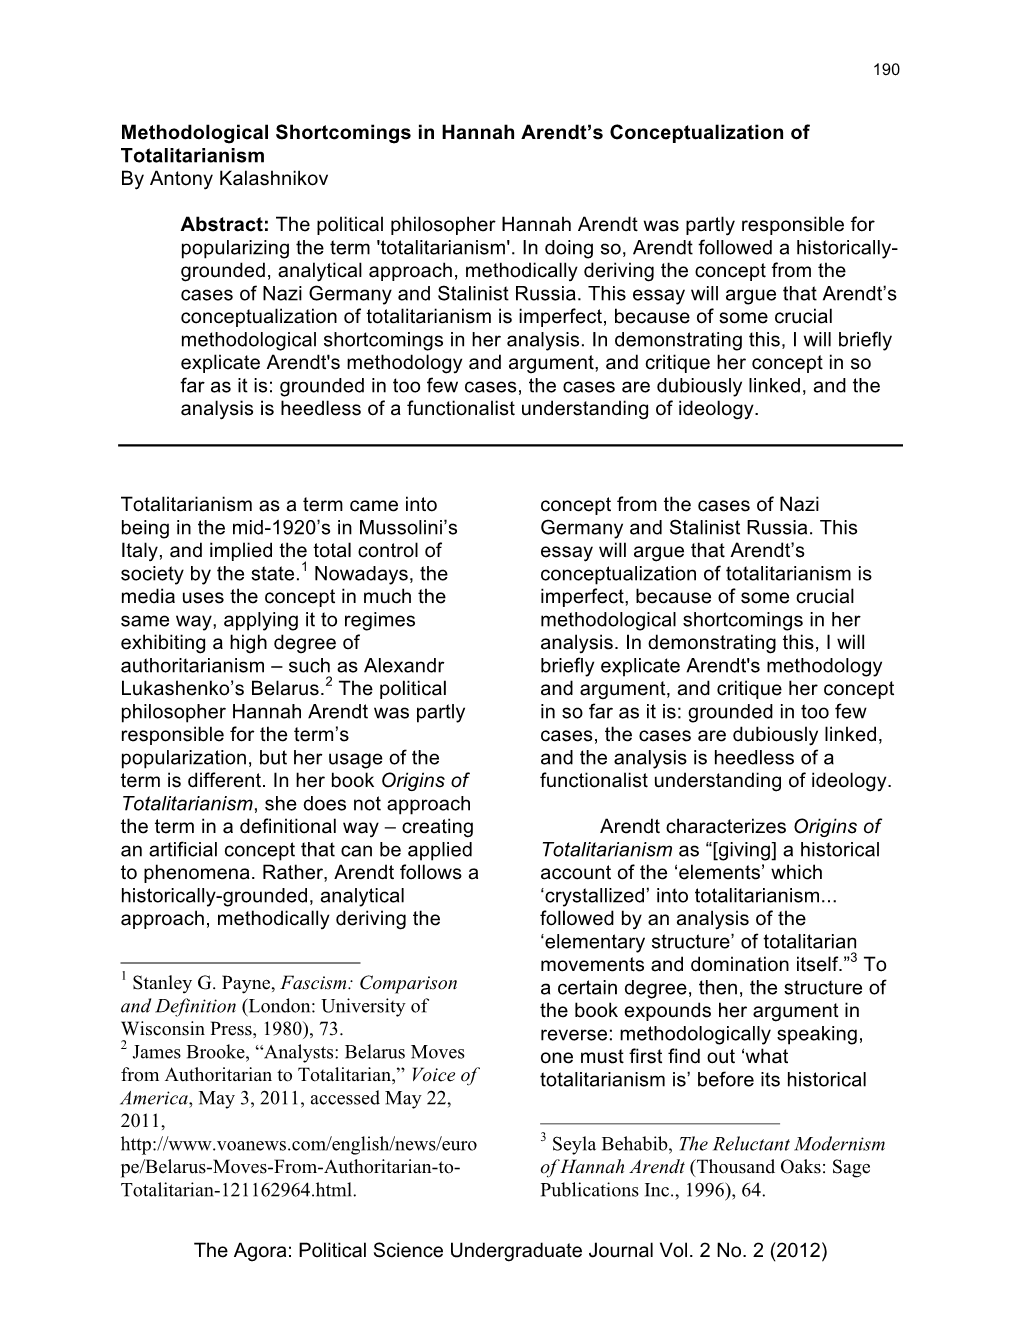 The Agora: Political Science Undergraduate Journal Vol. 2 No. 2 (2012) 191 Origins Can Be Discerned